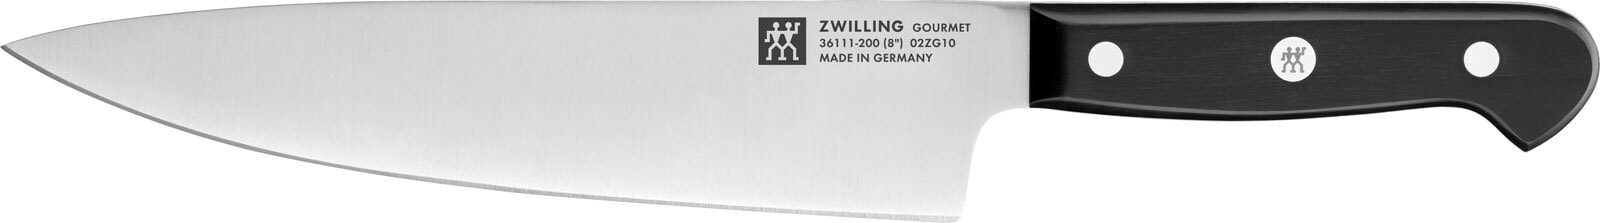 ZWILLING Messerblock GOURMET 7-teilig Holz/Metall